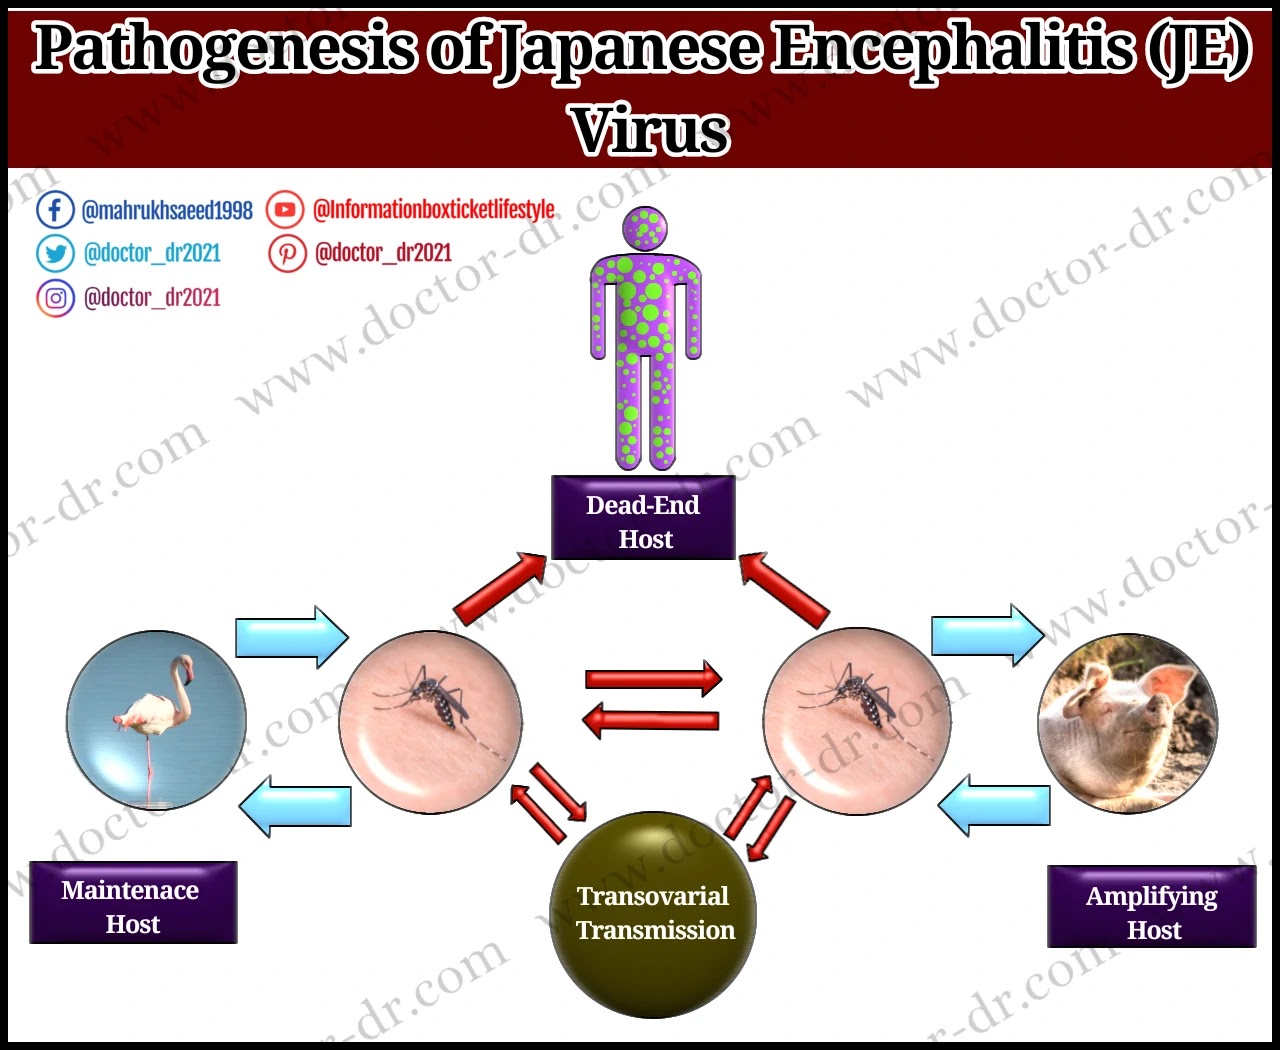 Pathogenesis of Japanese Encephalitis (JE) Virus